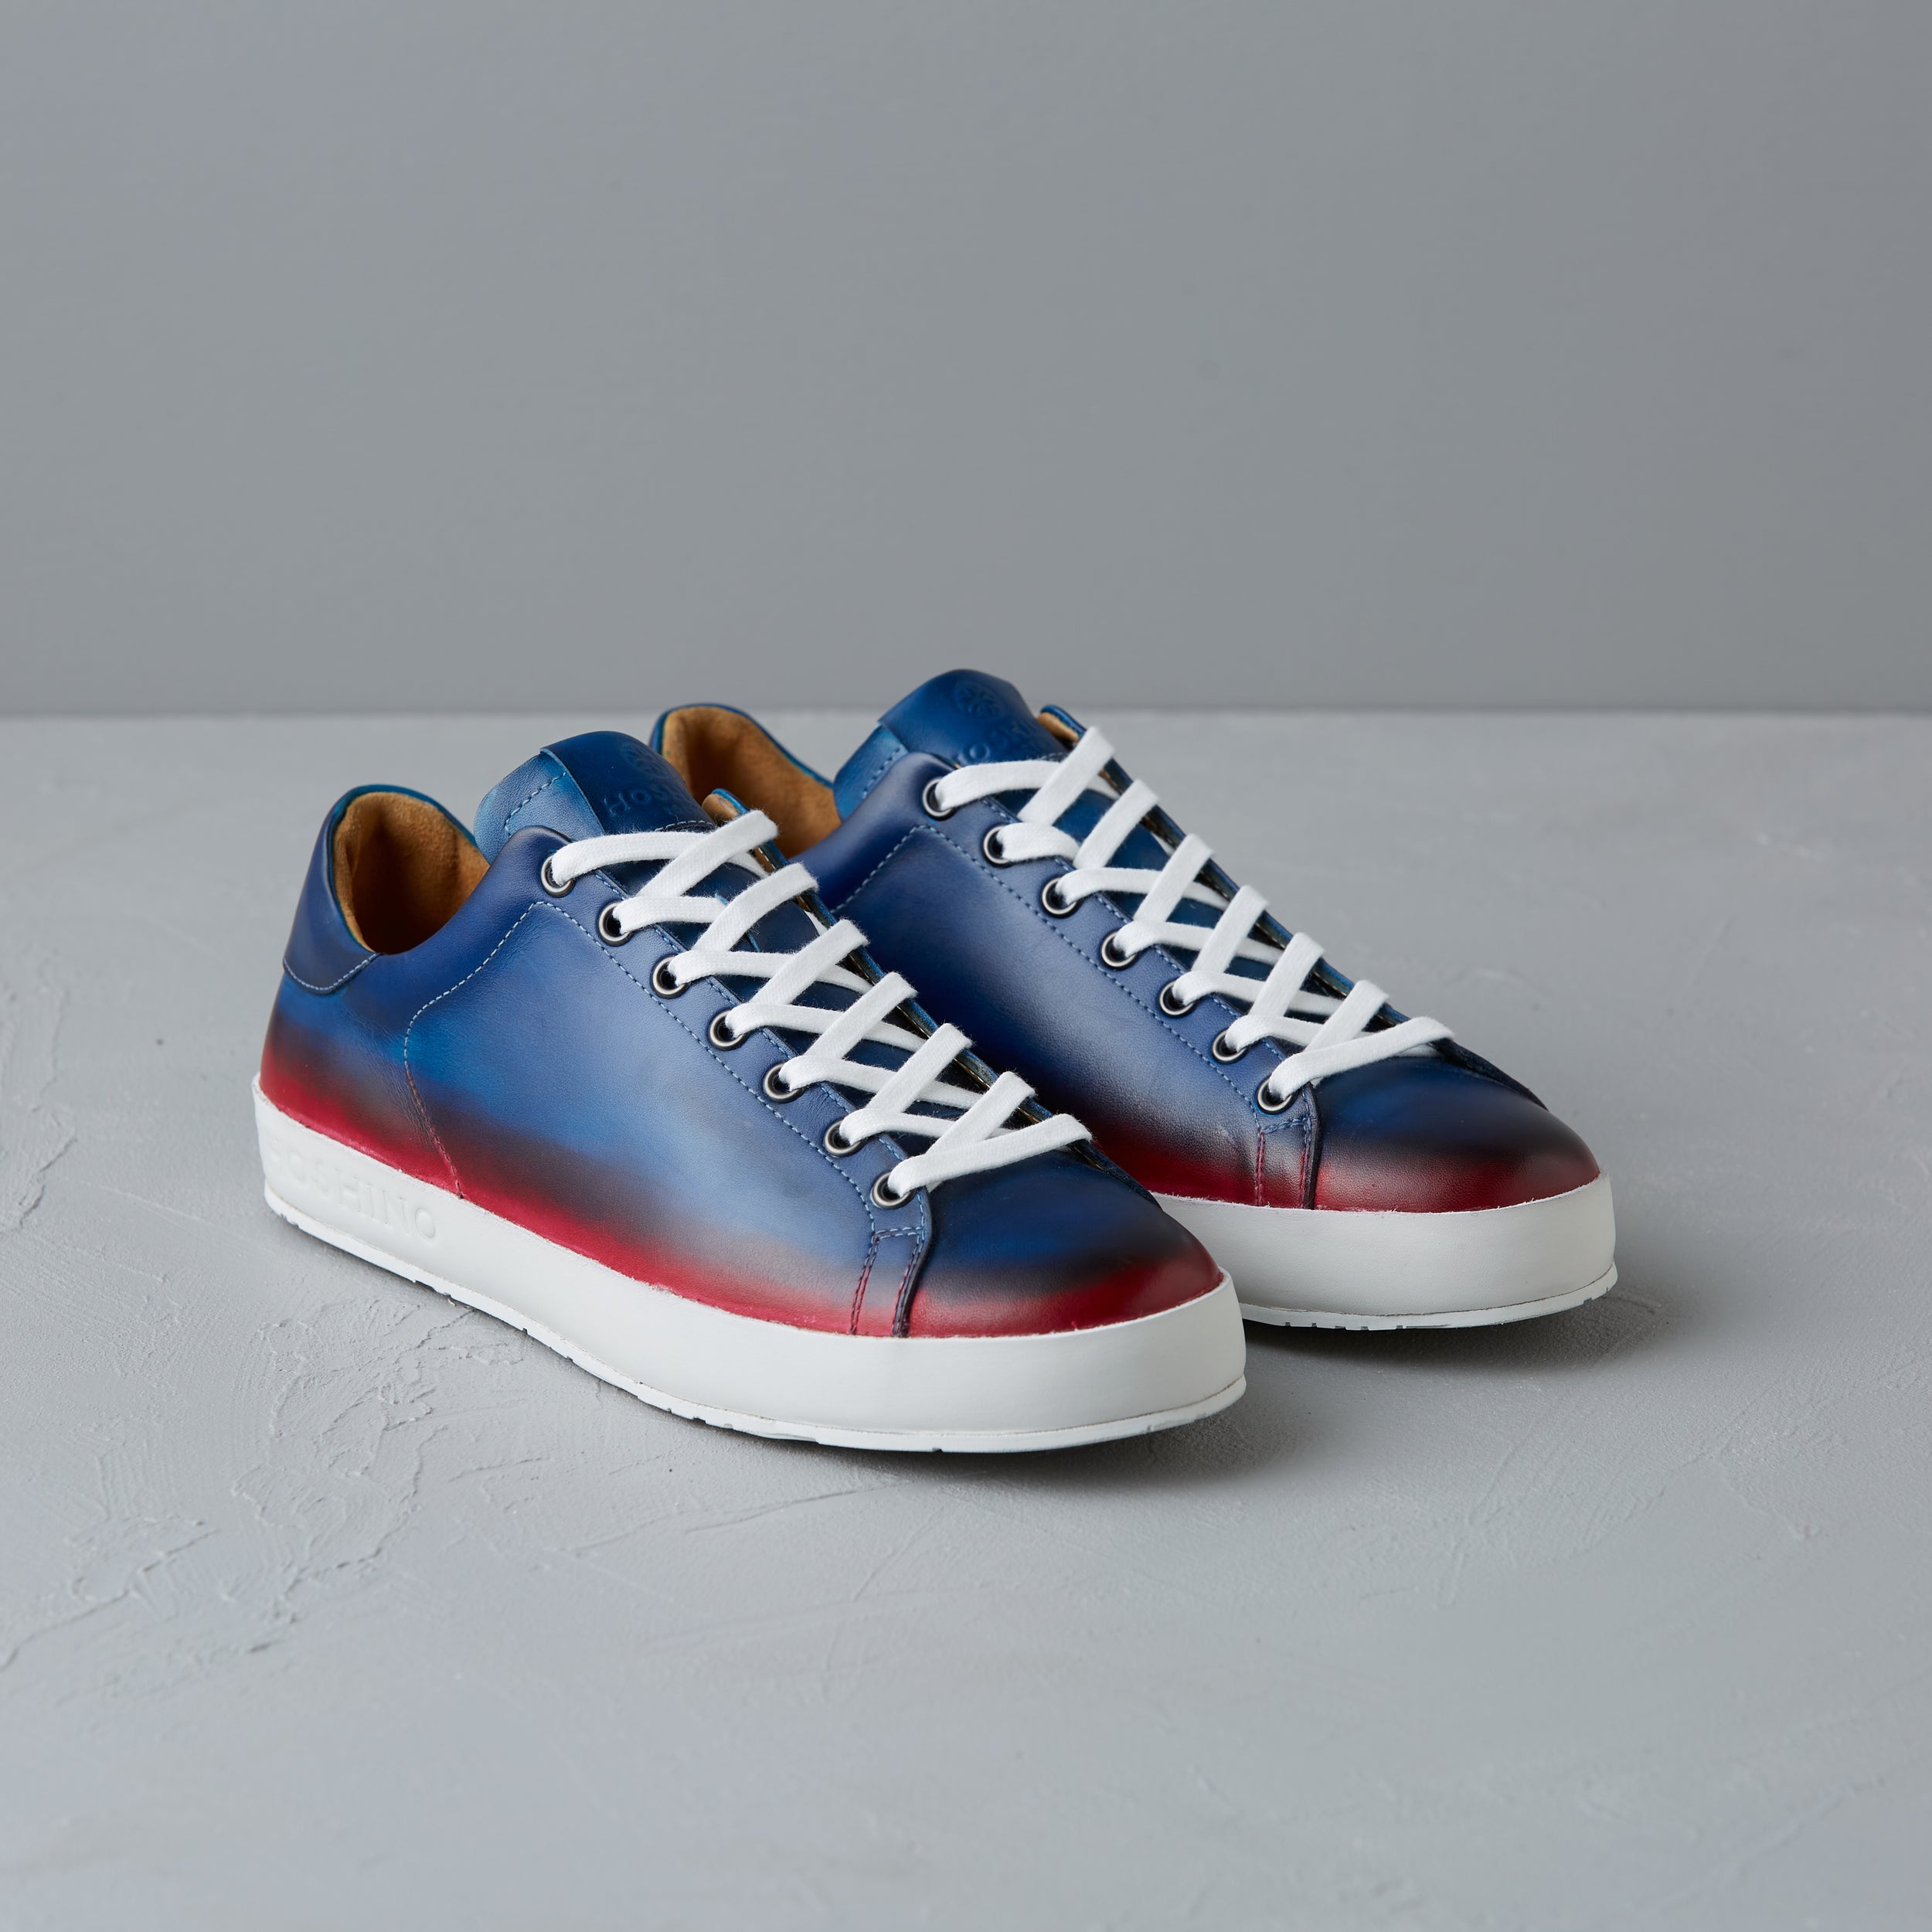 [women's] Liberte - low-top sneakers - red x blue patina calfskin